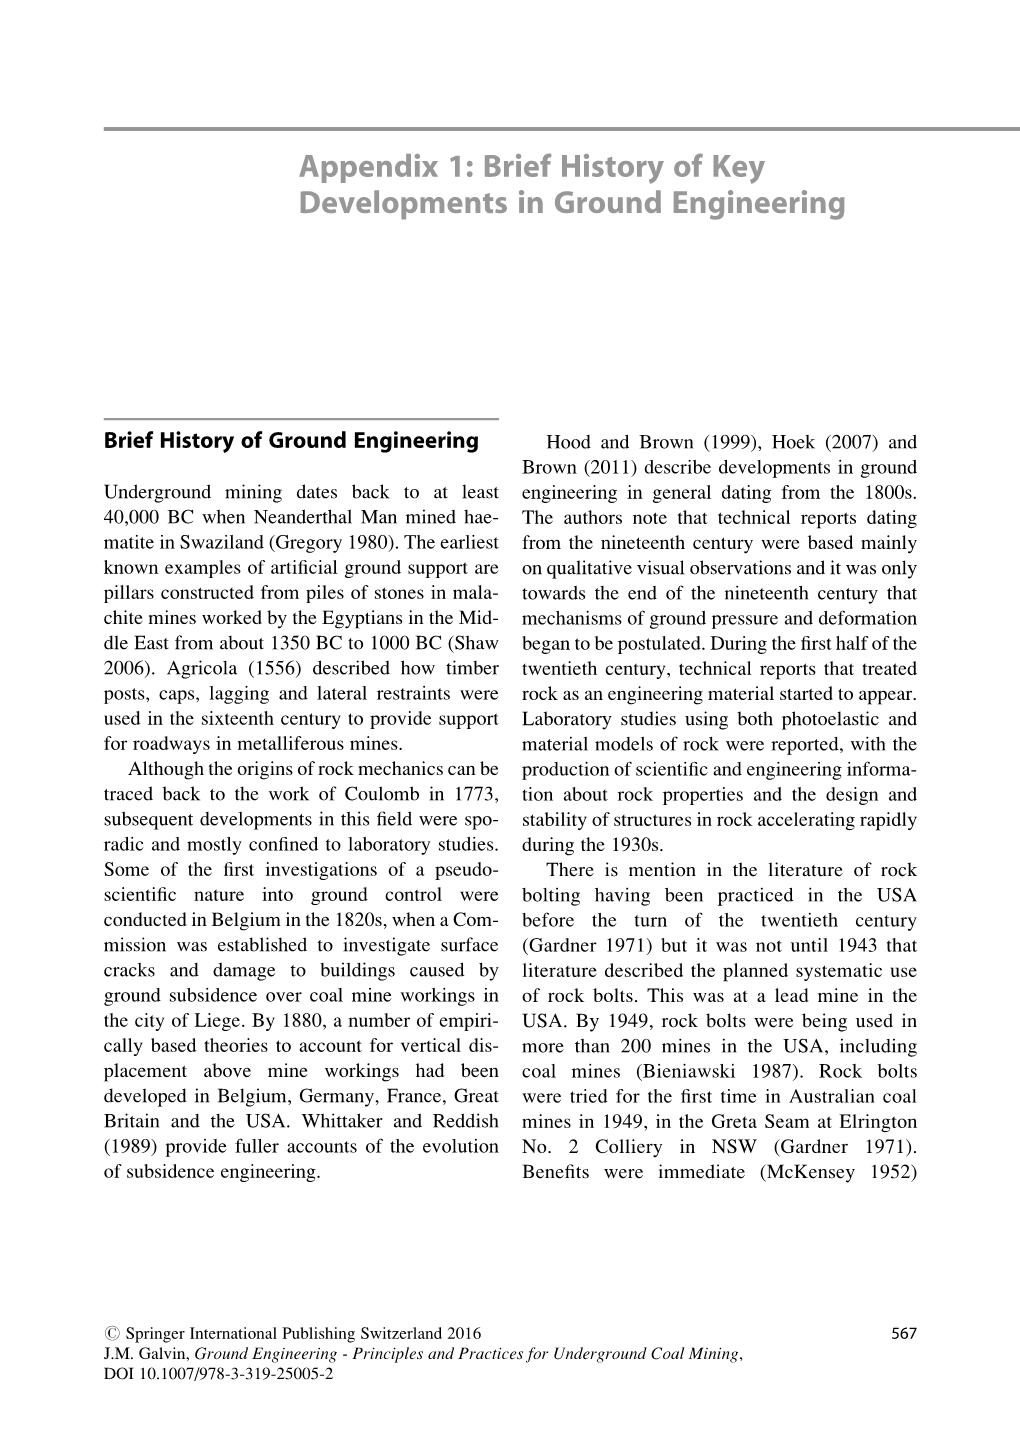 Appendix 1: Brief History of Key Developments in Ground Engineering